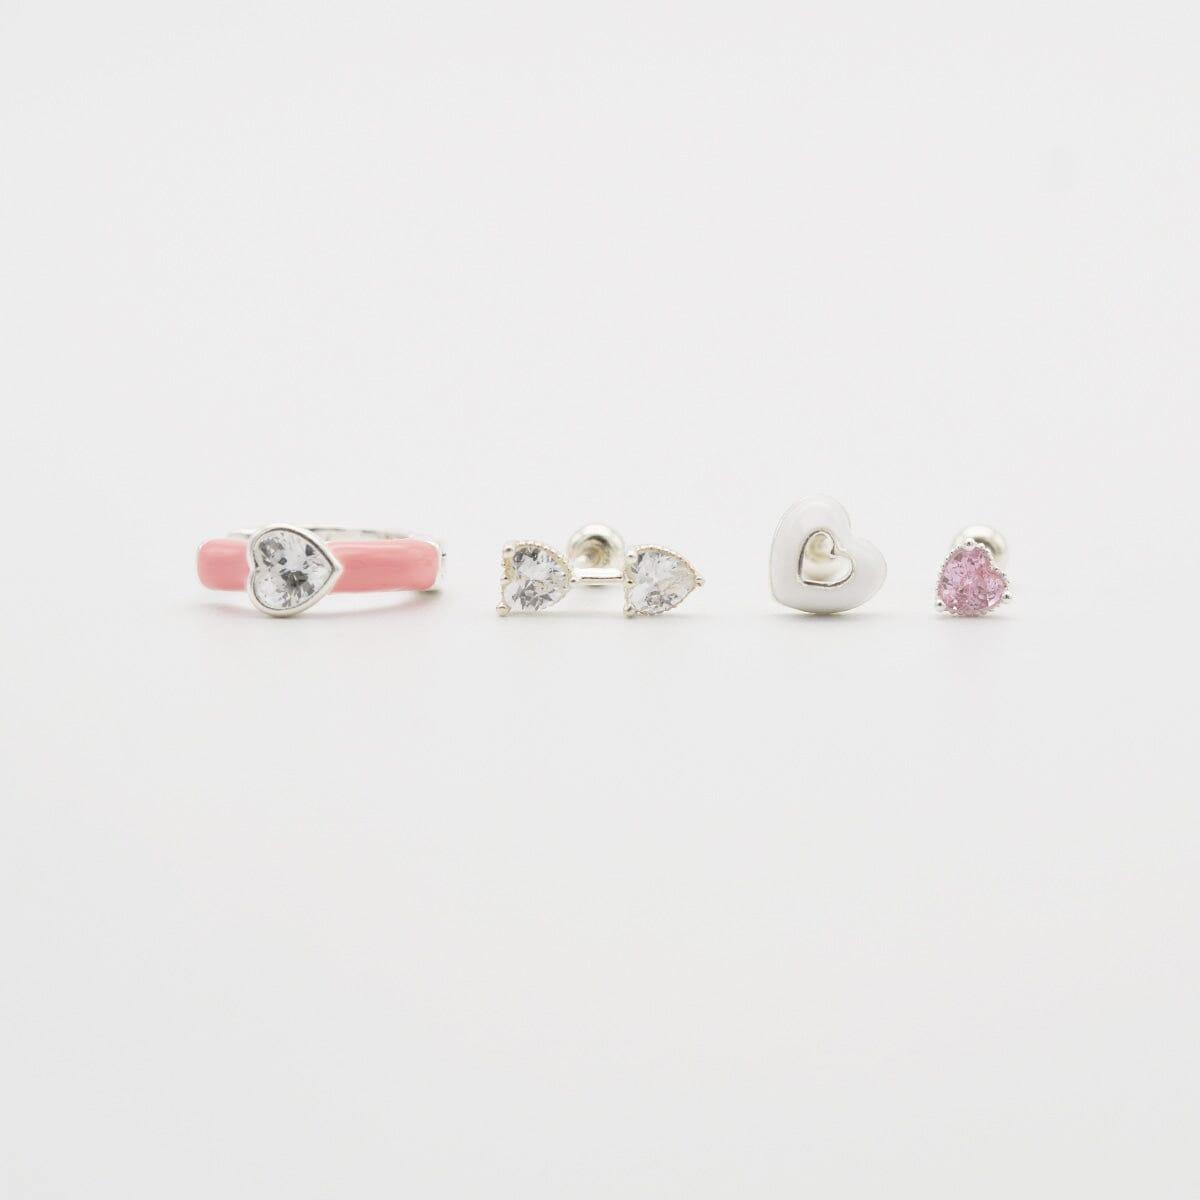 [925 Silver]ピンクキューピットピアス[4セット] Earrings 10000won 